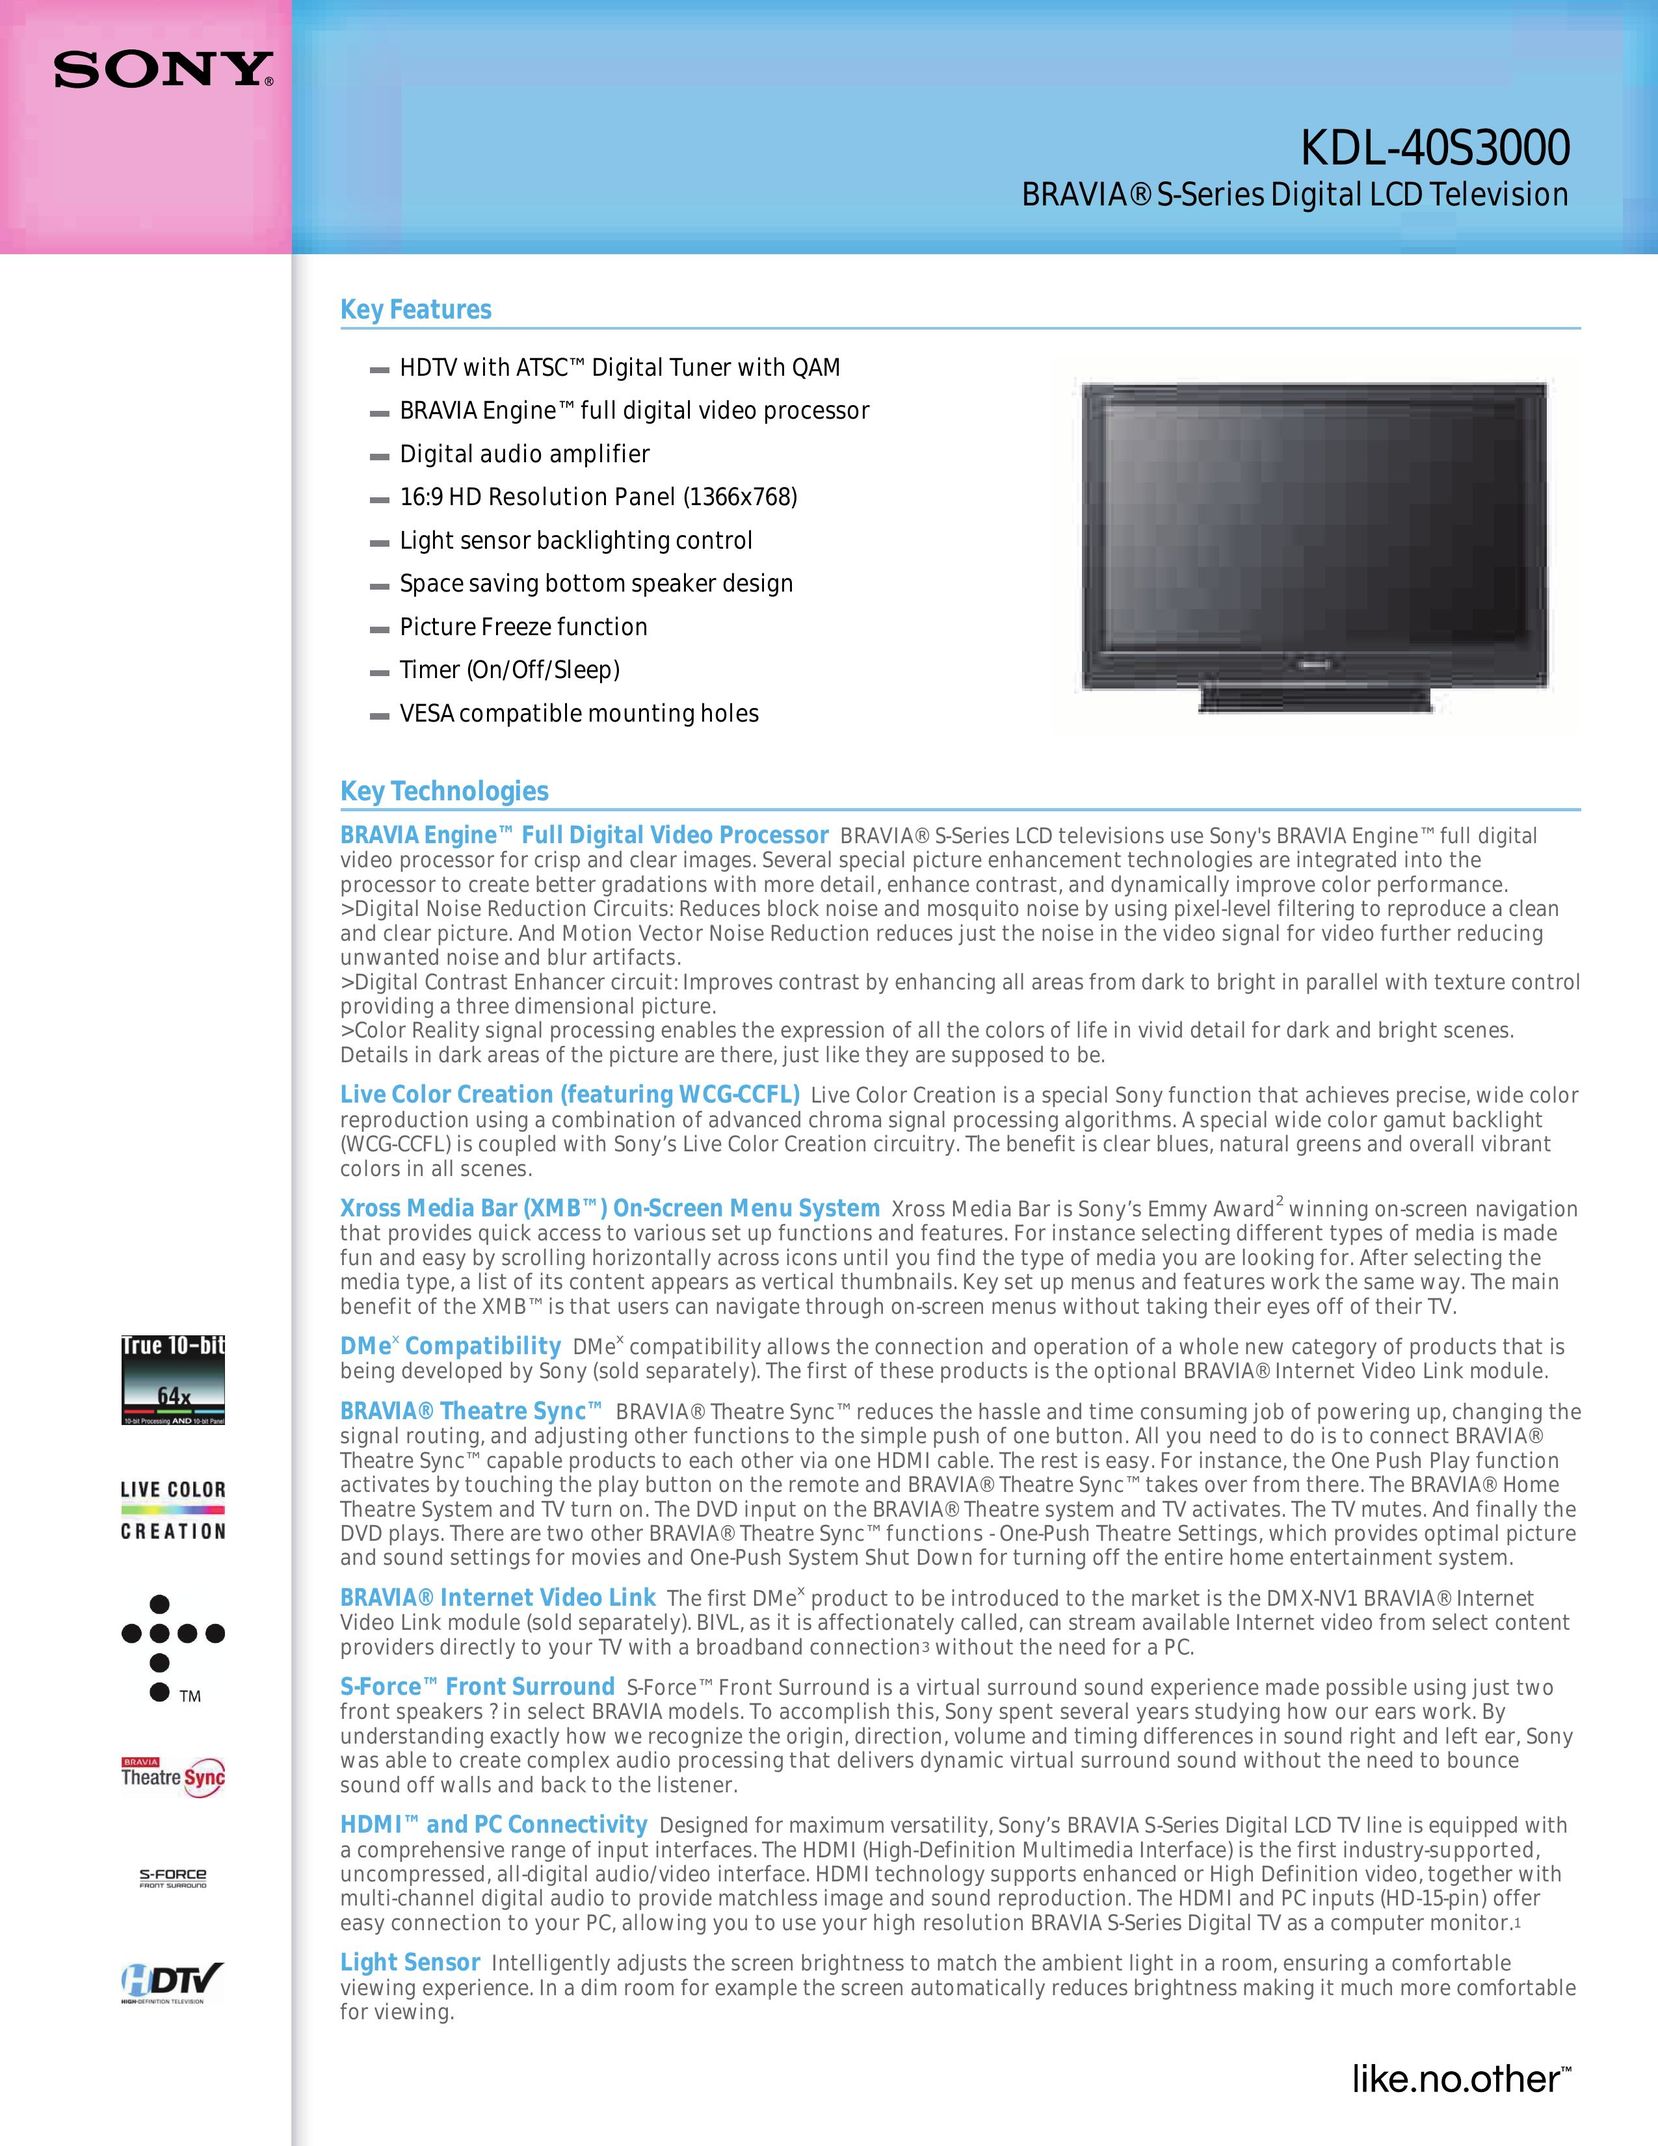 Sony KDL-40S3000 TV VCR Combo User Manual